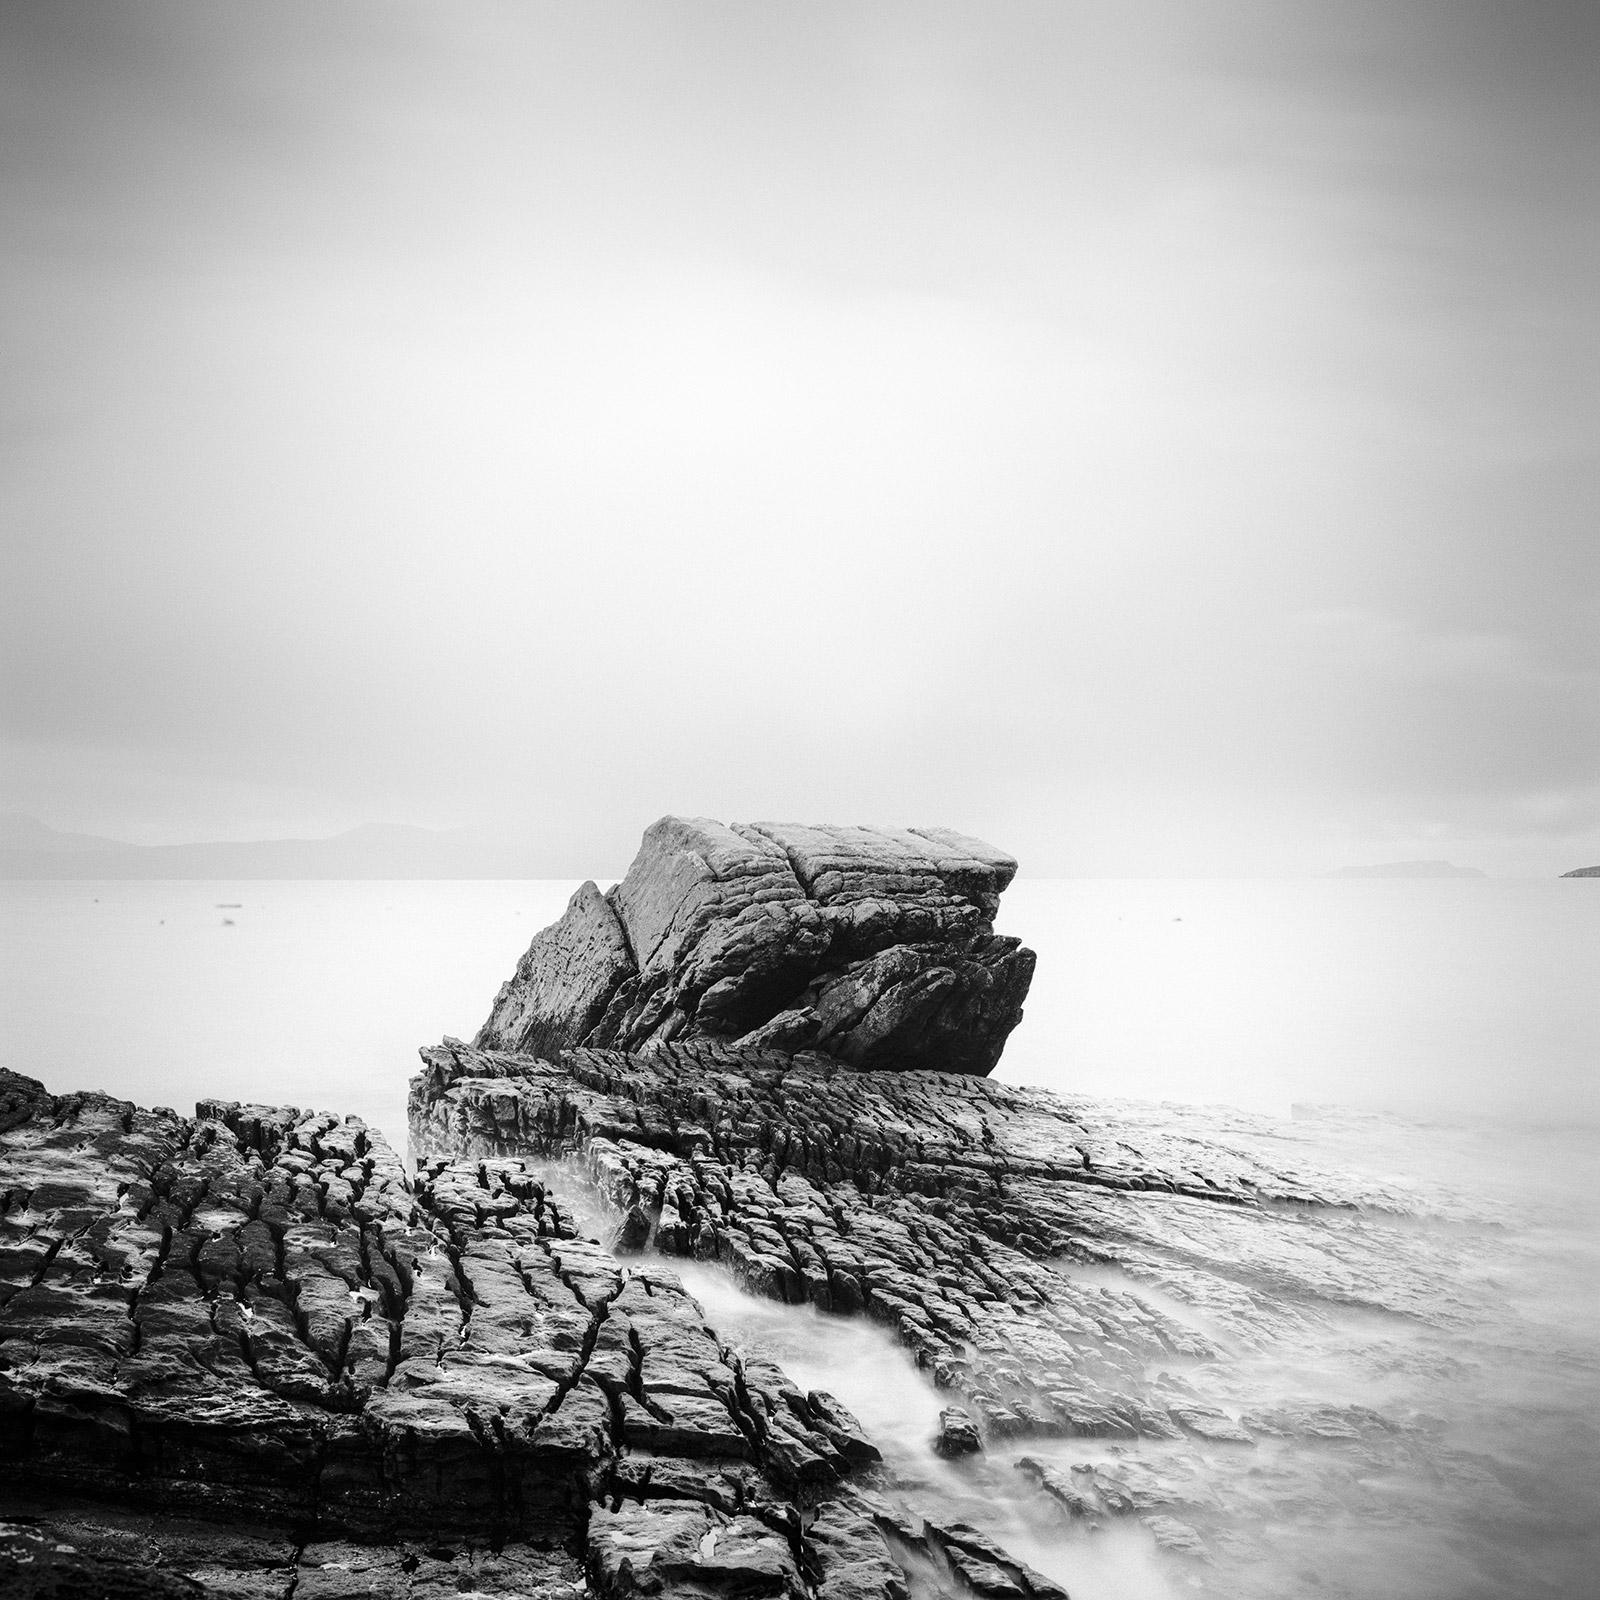 Fissured Rock, scottish Coast, Isle of Sky, minimalist black and white landscape